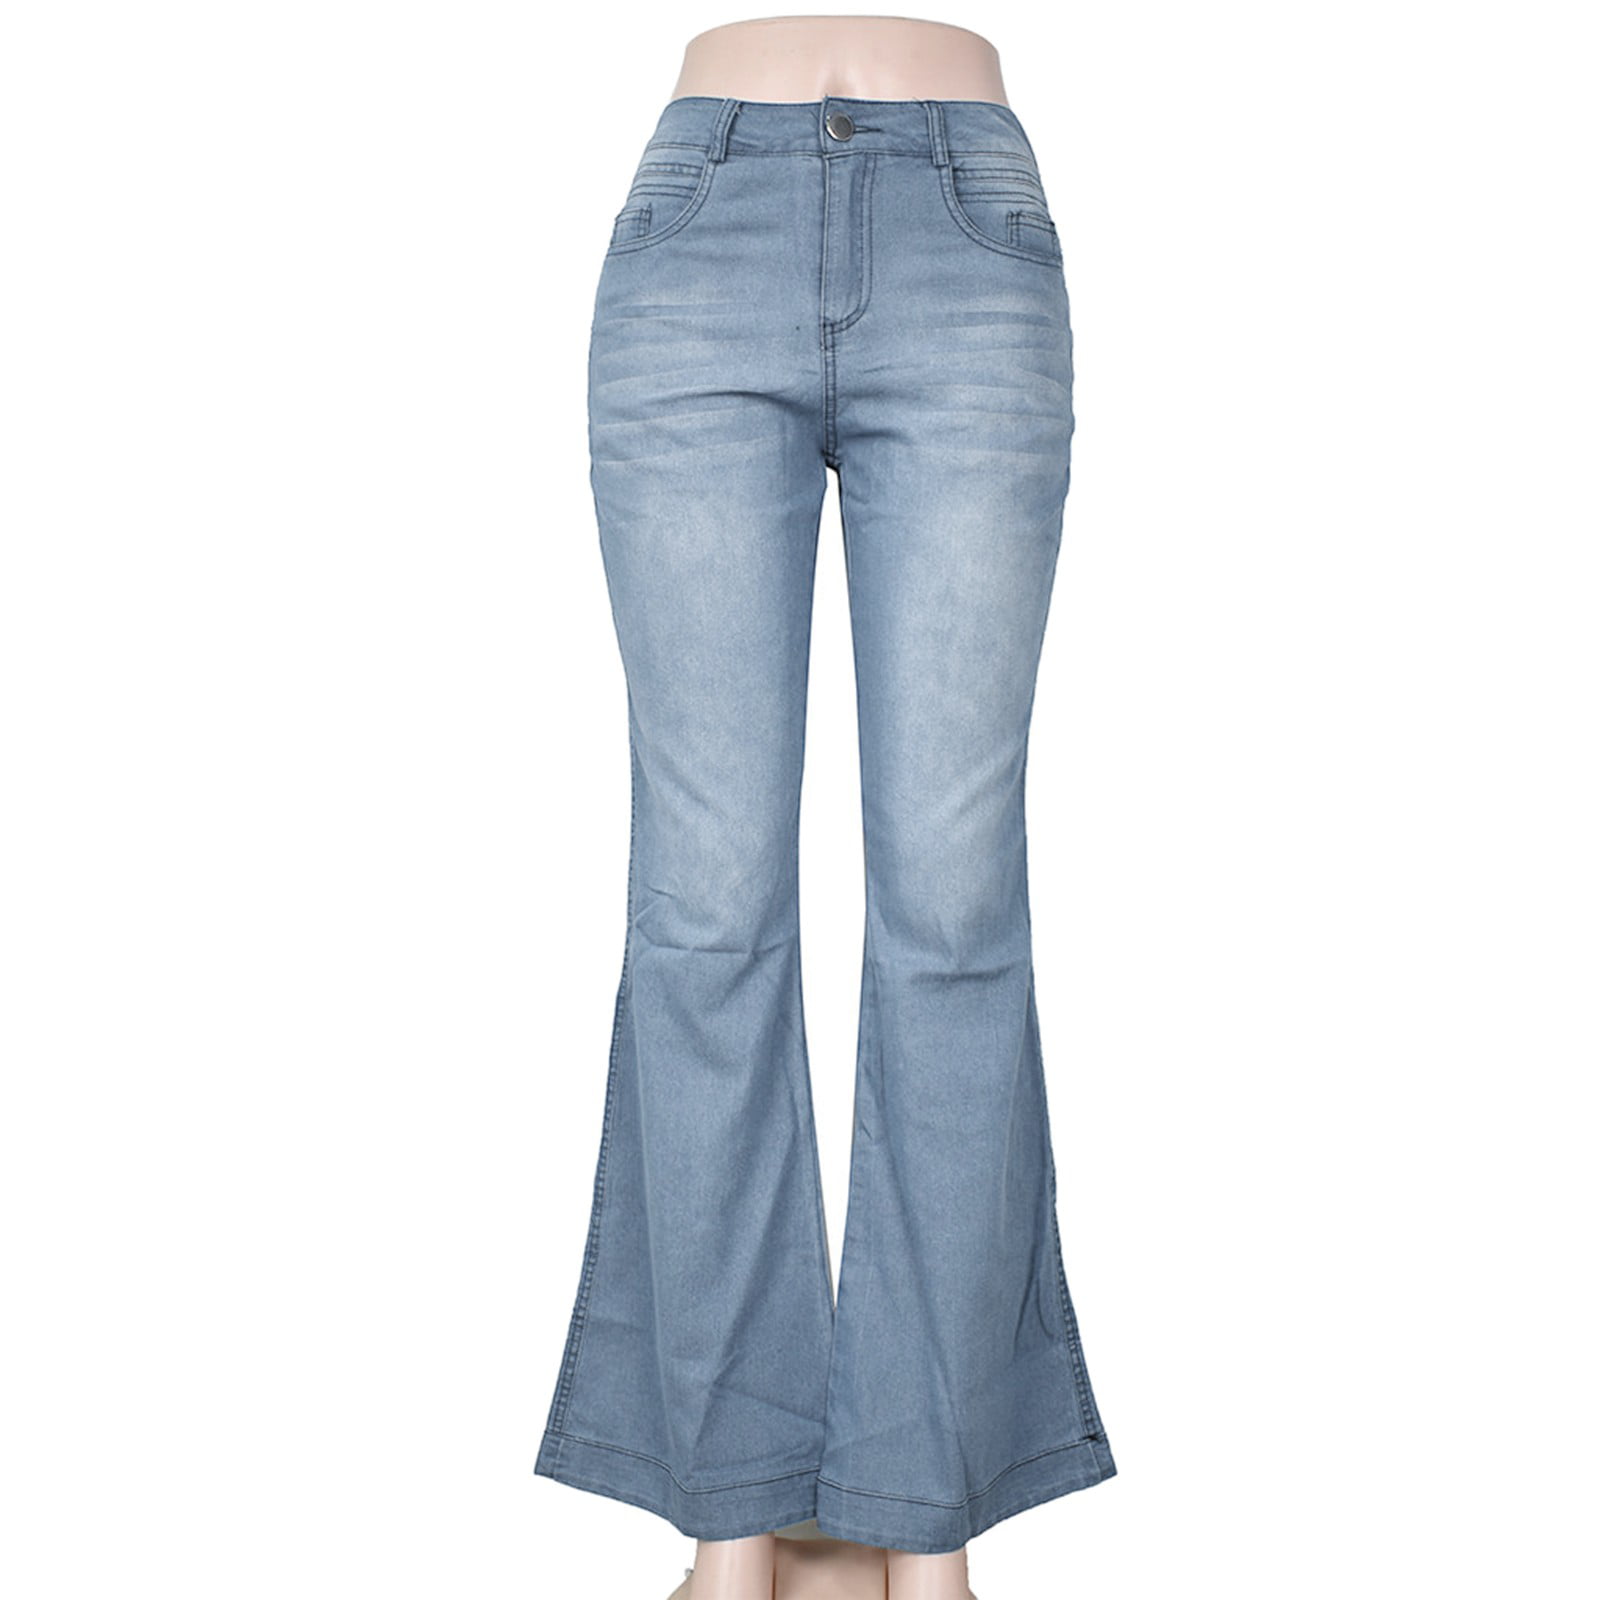 CBGELRT Trendy Jeans for Women High Waist Female Womans Jeans